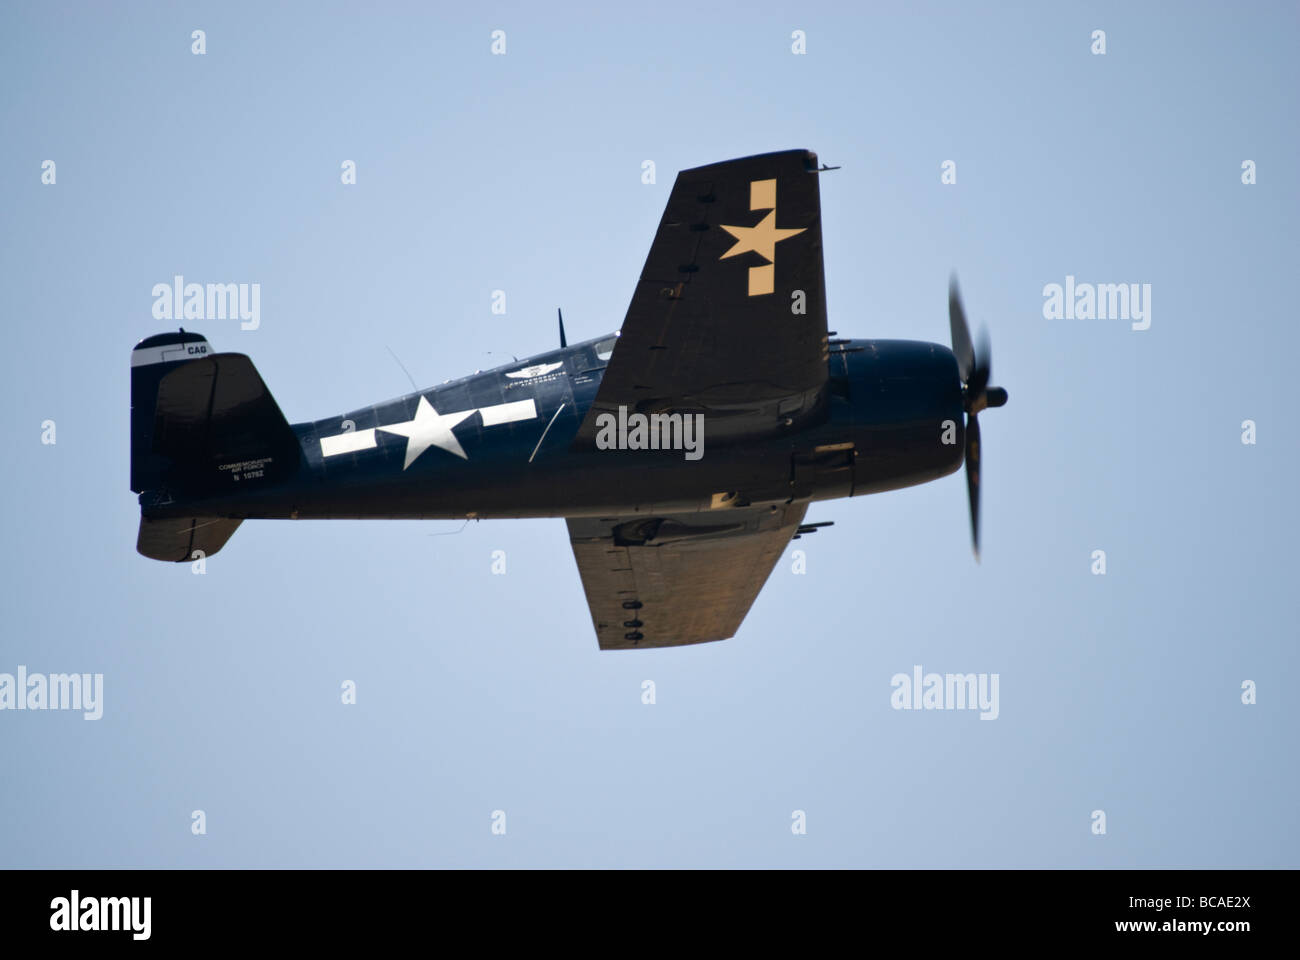 A Grumman F6F Hellcat flies at an air show. Stock Photo